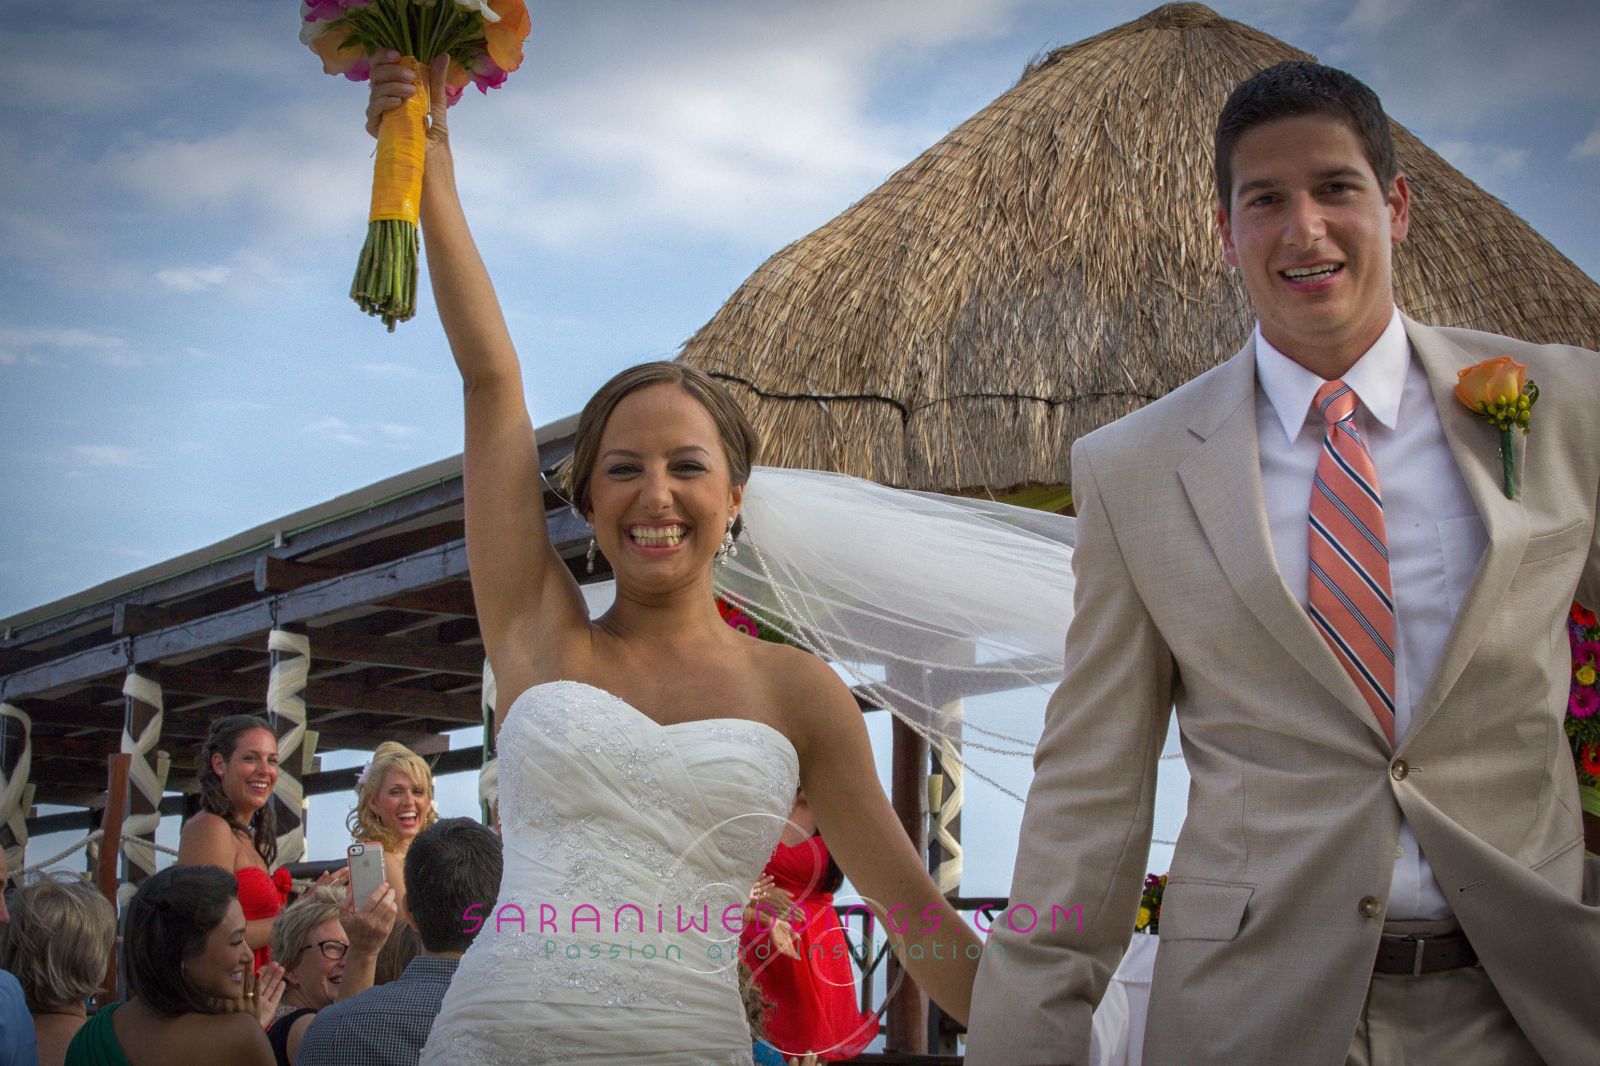 Cancun Destination Weddings
Photography by Sarani E
Sarani Weddings